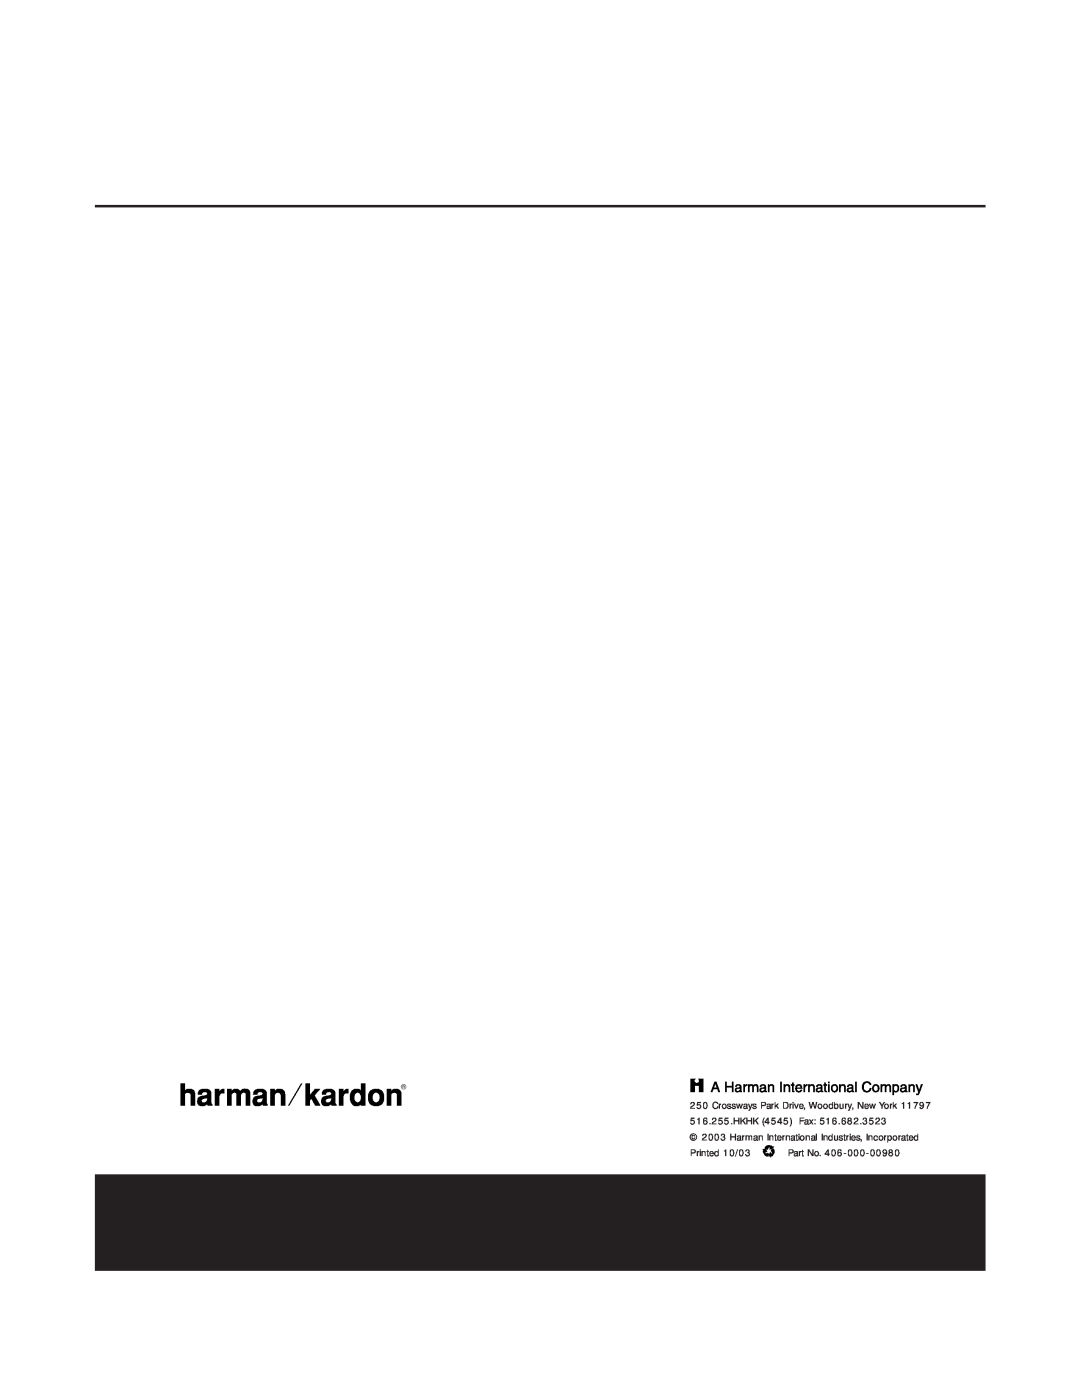 Harman-Kardon HKTS 5 OM owner manual Printed 10/03 Part No 